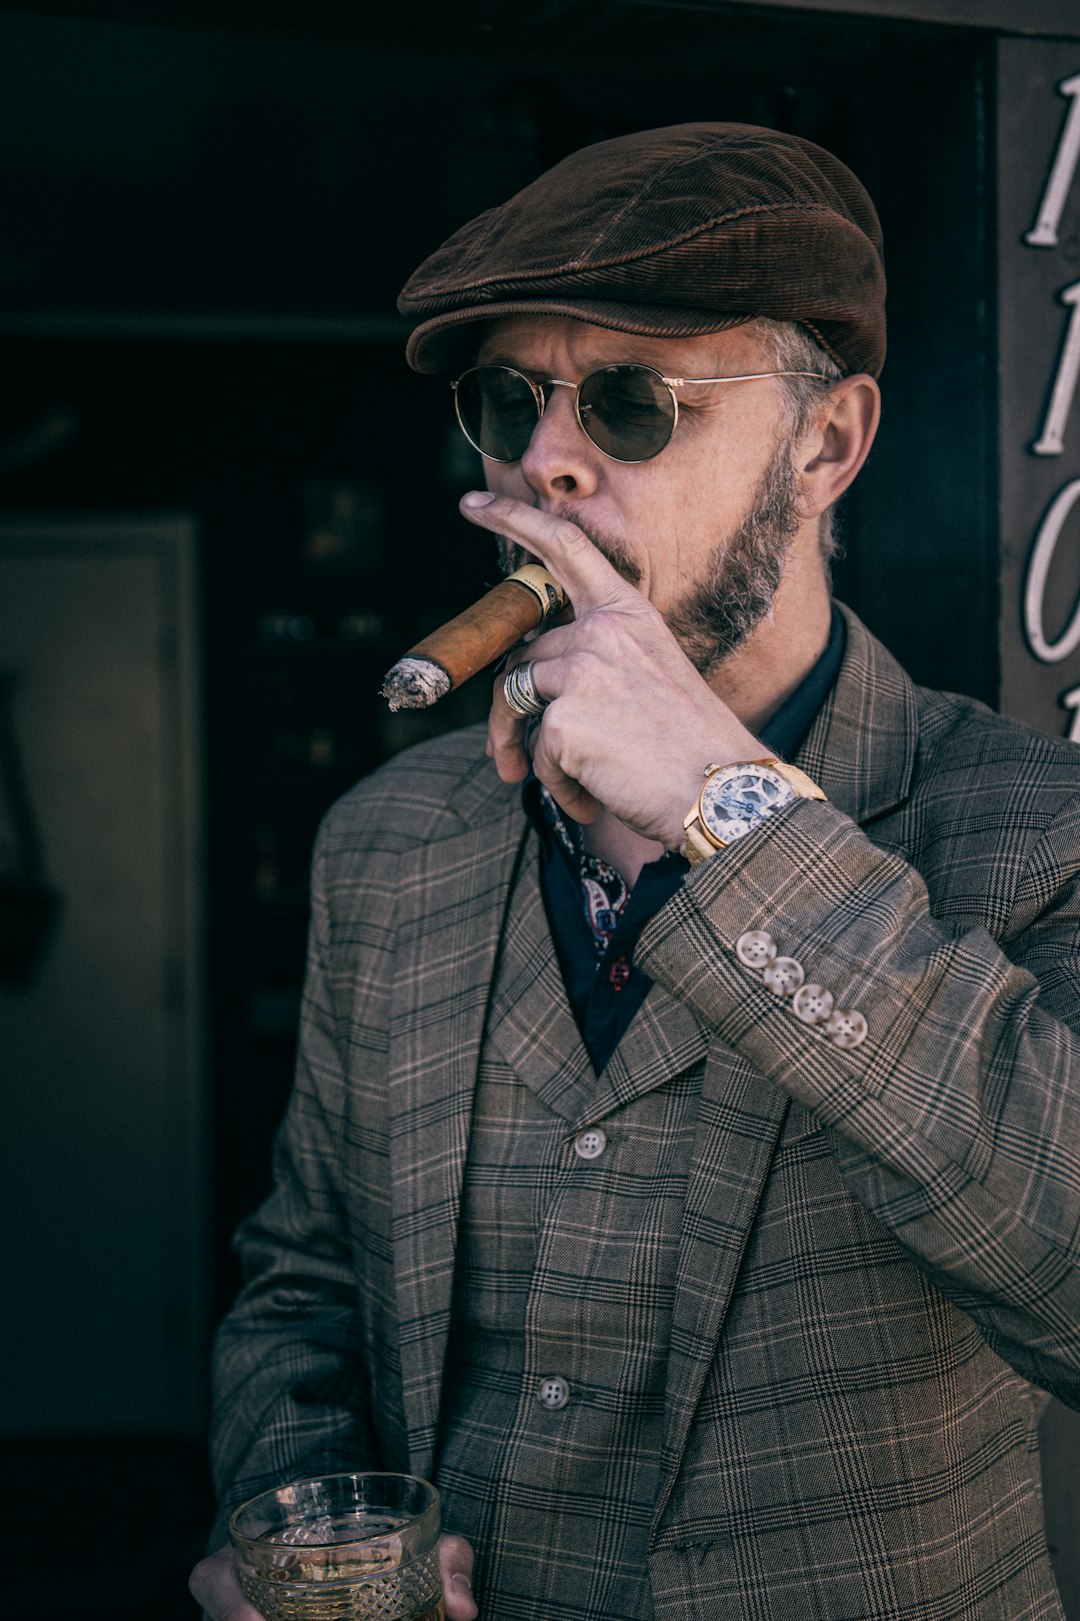 Owner of Gentlemen's Breakfast, Van de la Plante. Drop in for custom vintage eyewear and enjoy free scotch and cigars. 